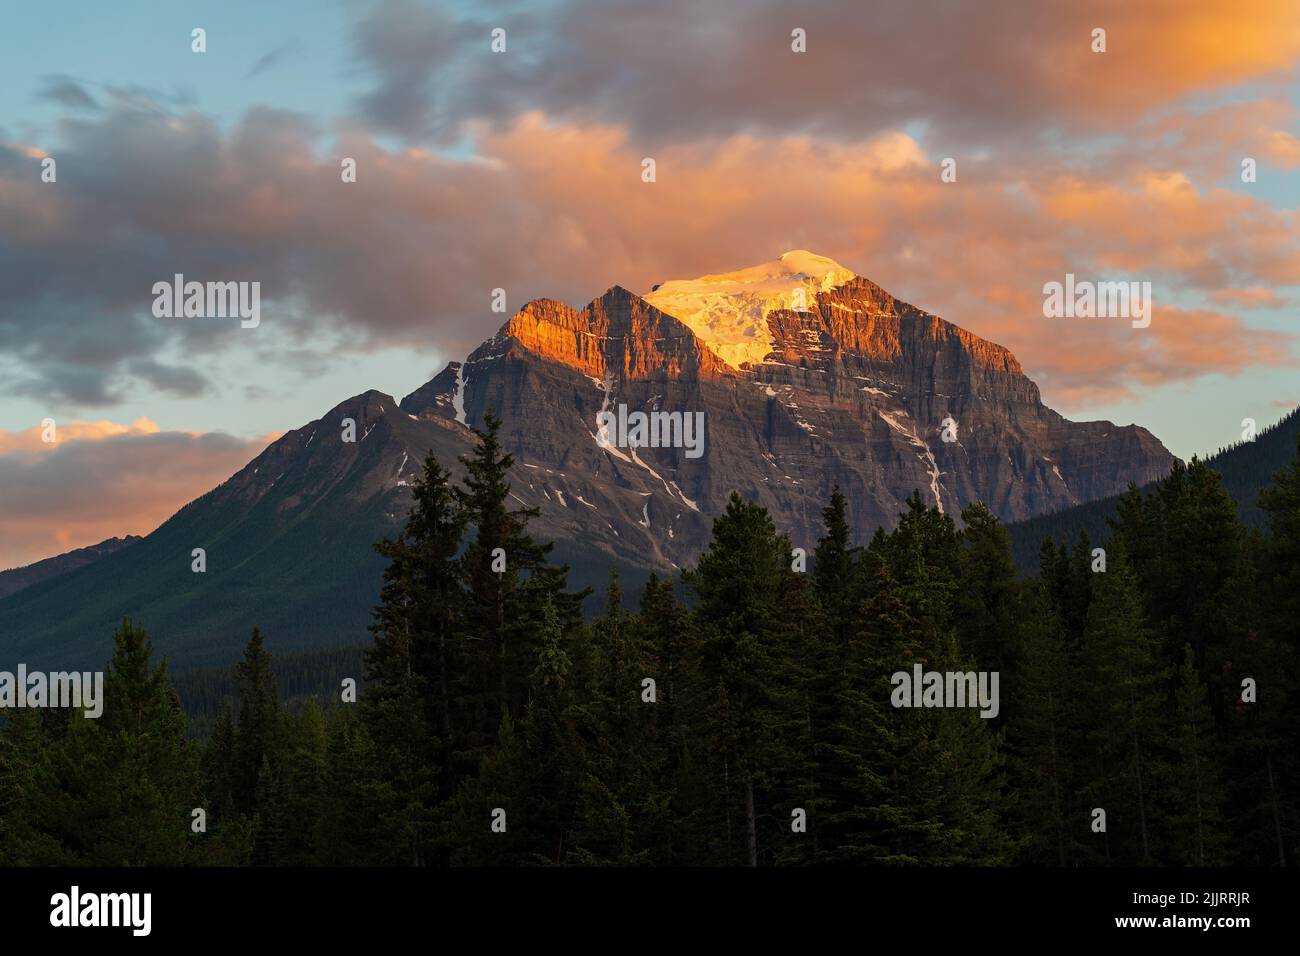 Temple mountain peak at sunset, Banff national park, Alberta, Canada. Stock Photo